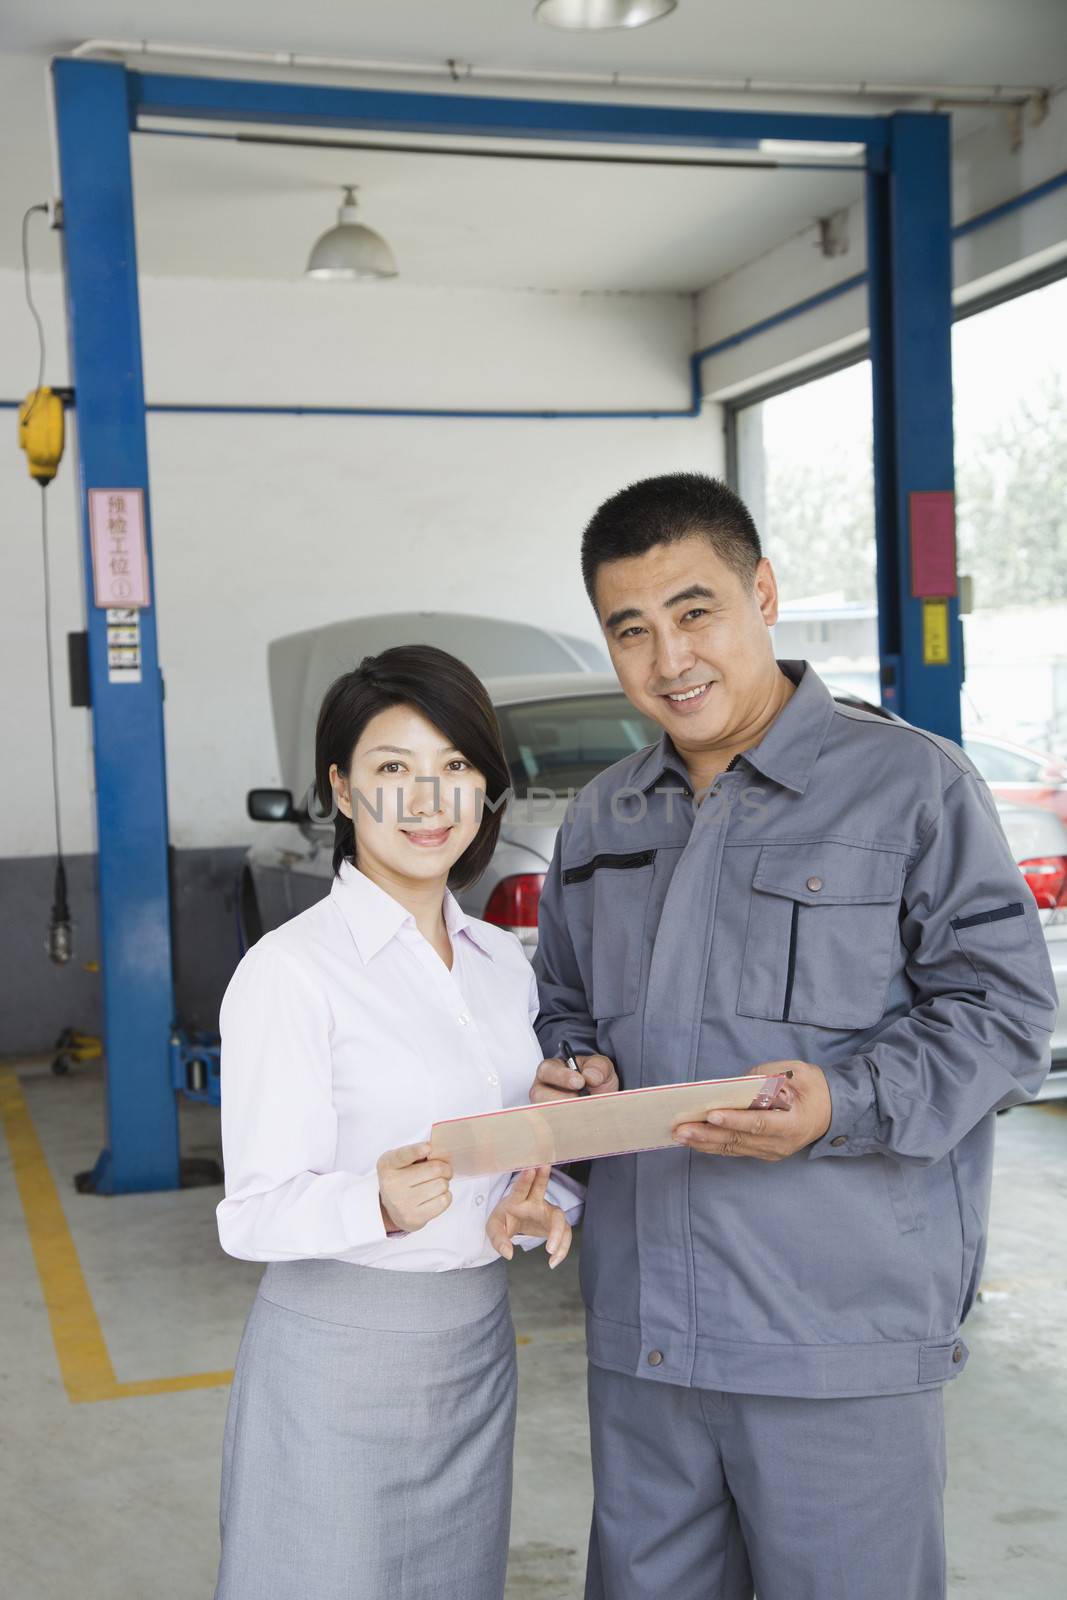 Garage Mechanic Explaining to Customer